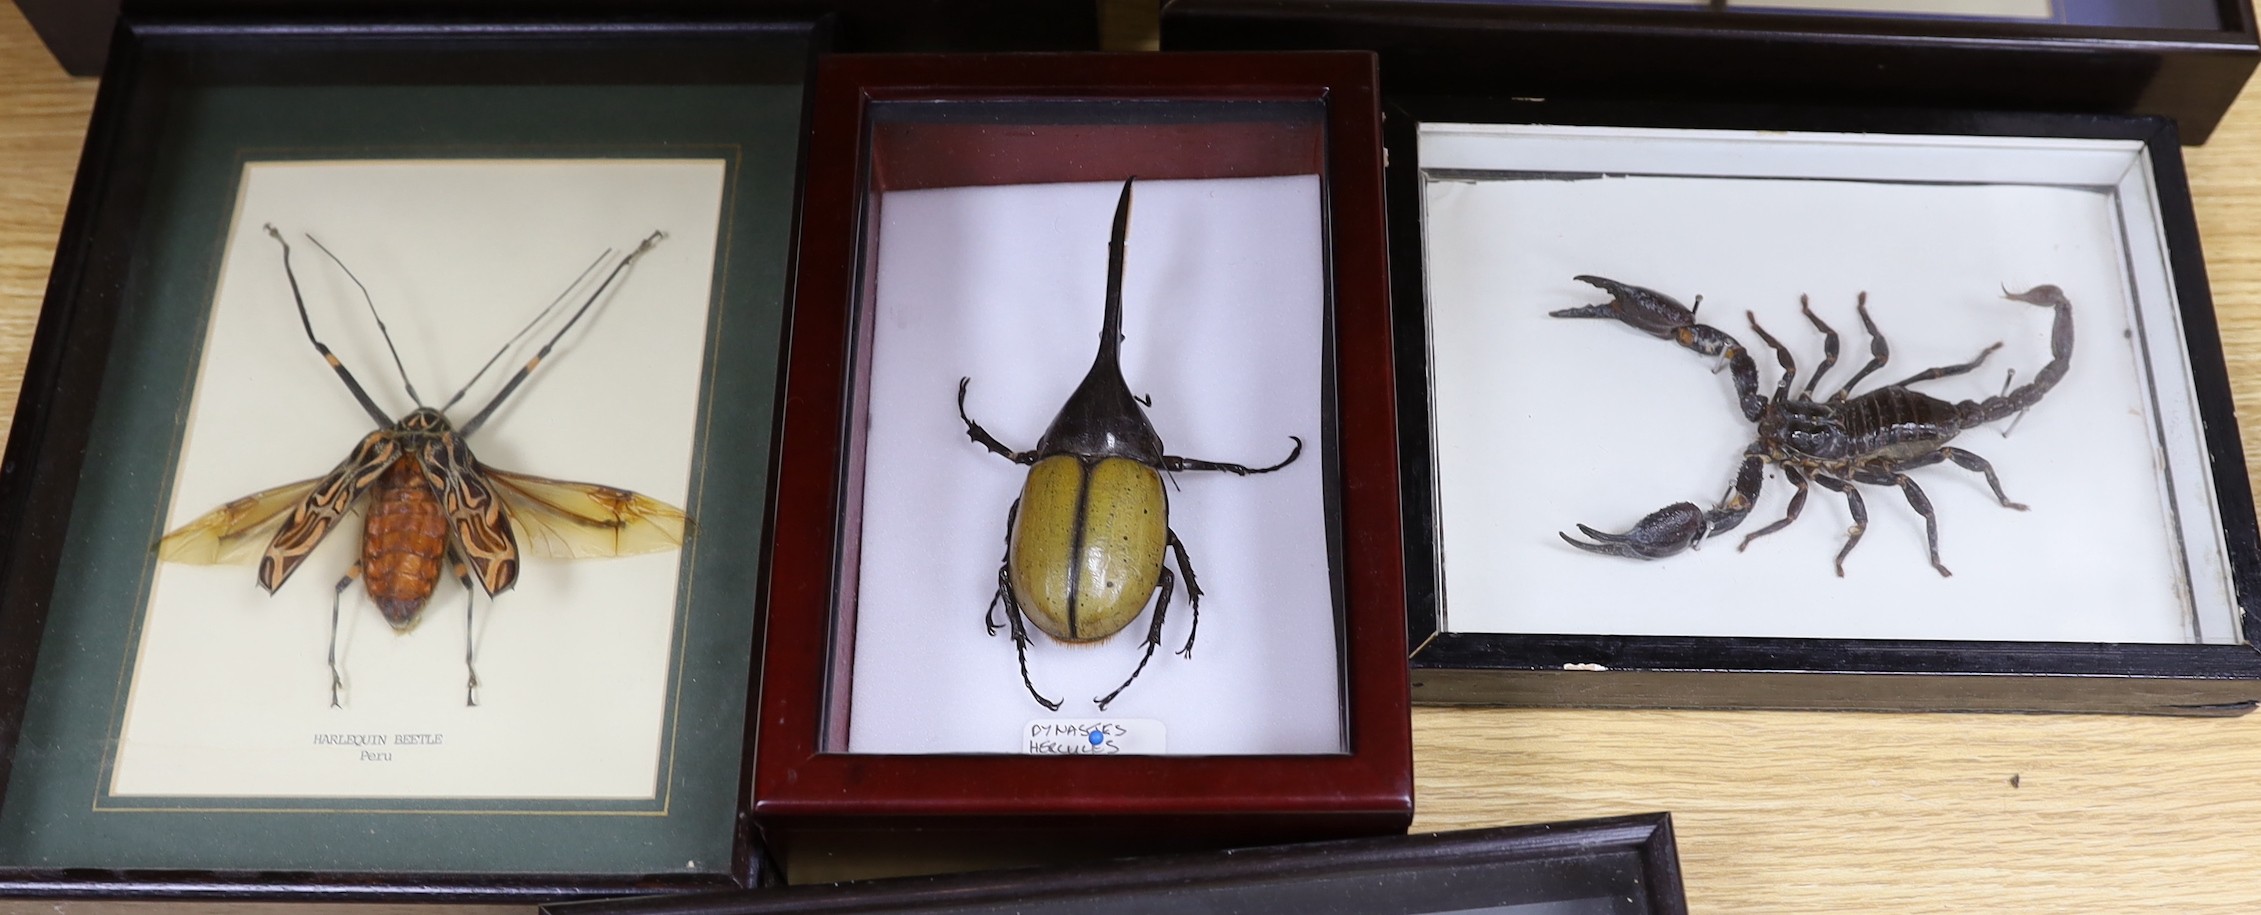 Entomology- Atlas beetle, Tarantula, Harlequin beetle, Hercules beetle, scorpion and Dragon Head Grasshopper specimens, in glazed cases, largest case is 31.5 cm across